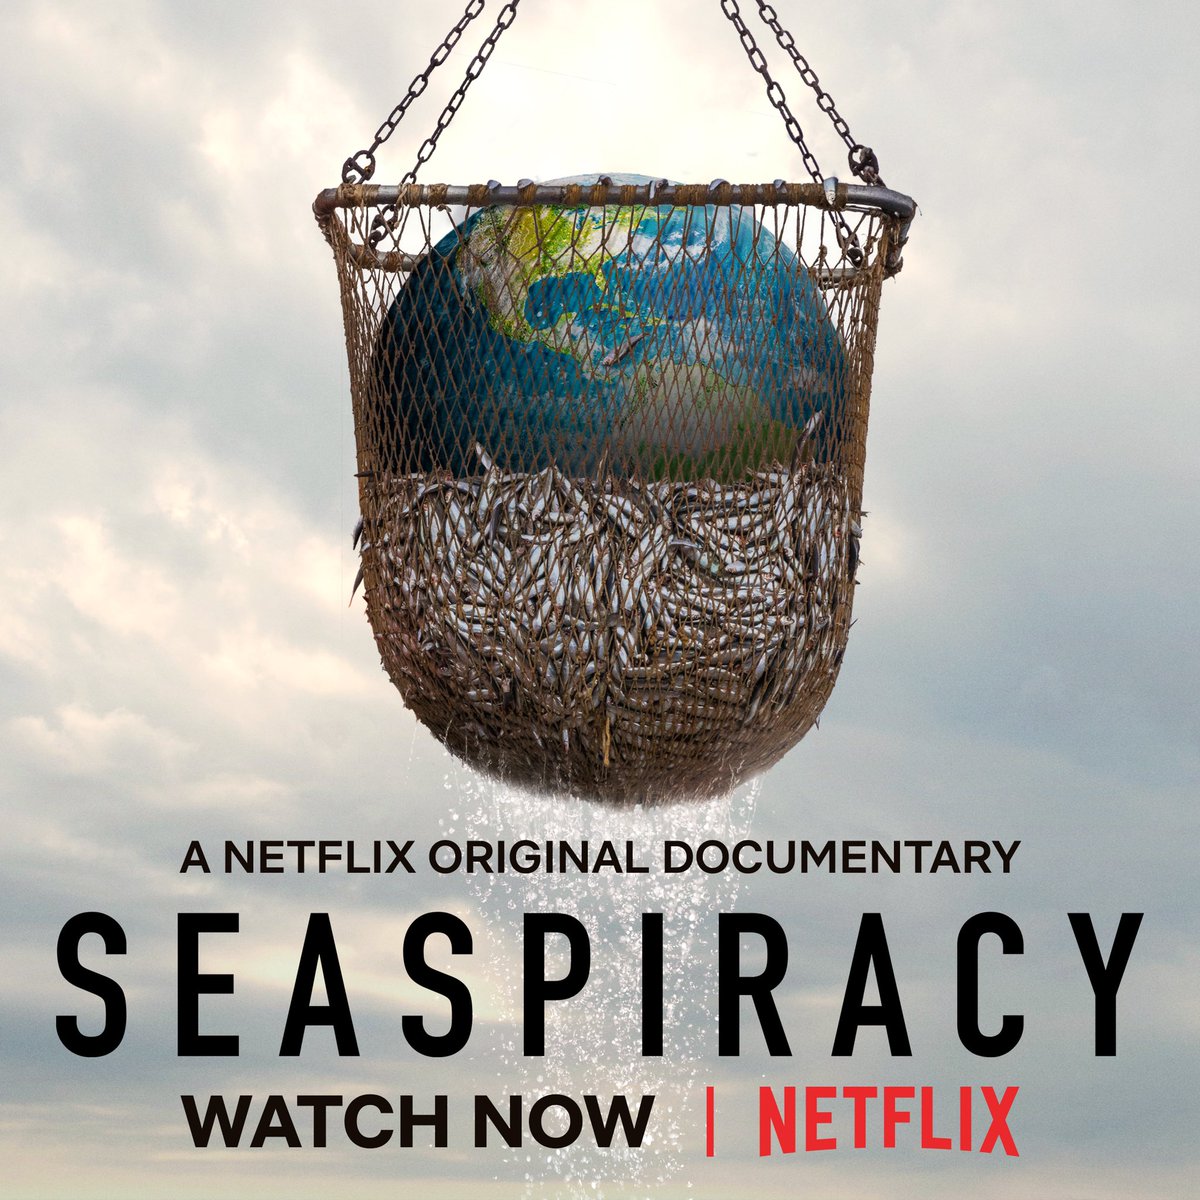 seaspiracy on Twitter: "SEASPIRACY IS NOW ON NETFLIX! Please watch, share  and spread the word. #seaspiracy… "